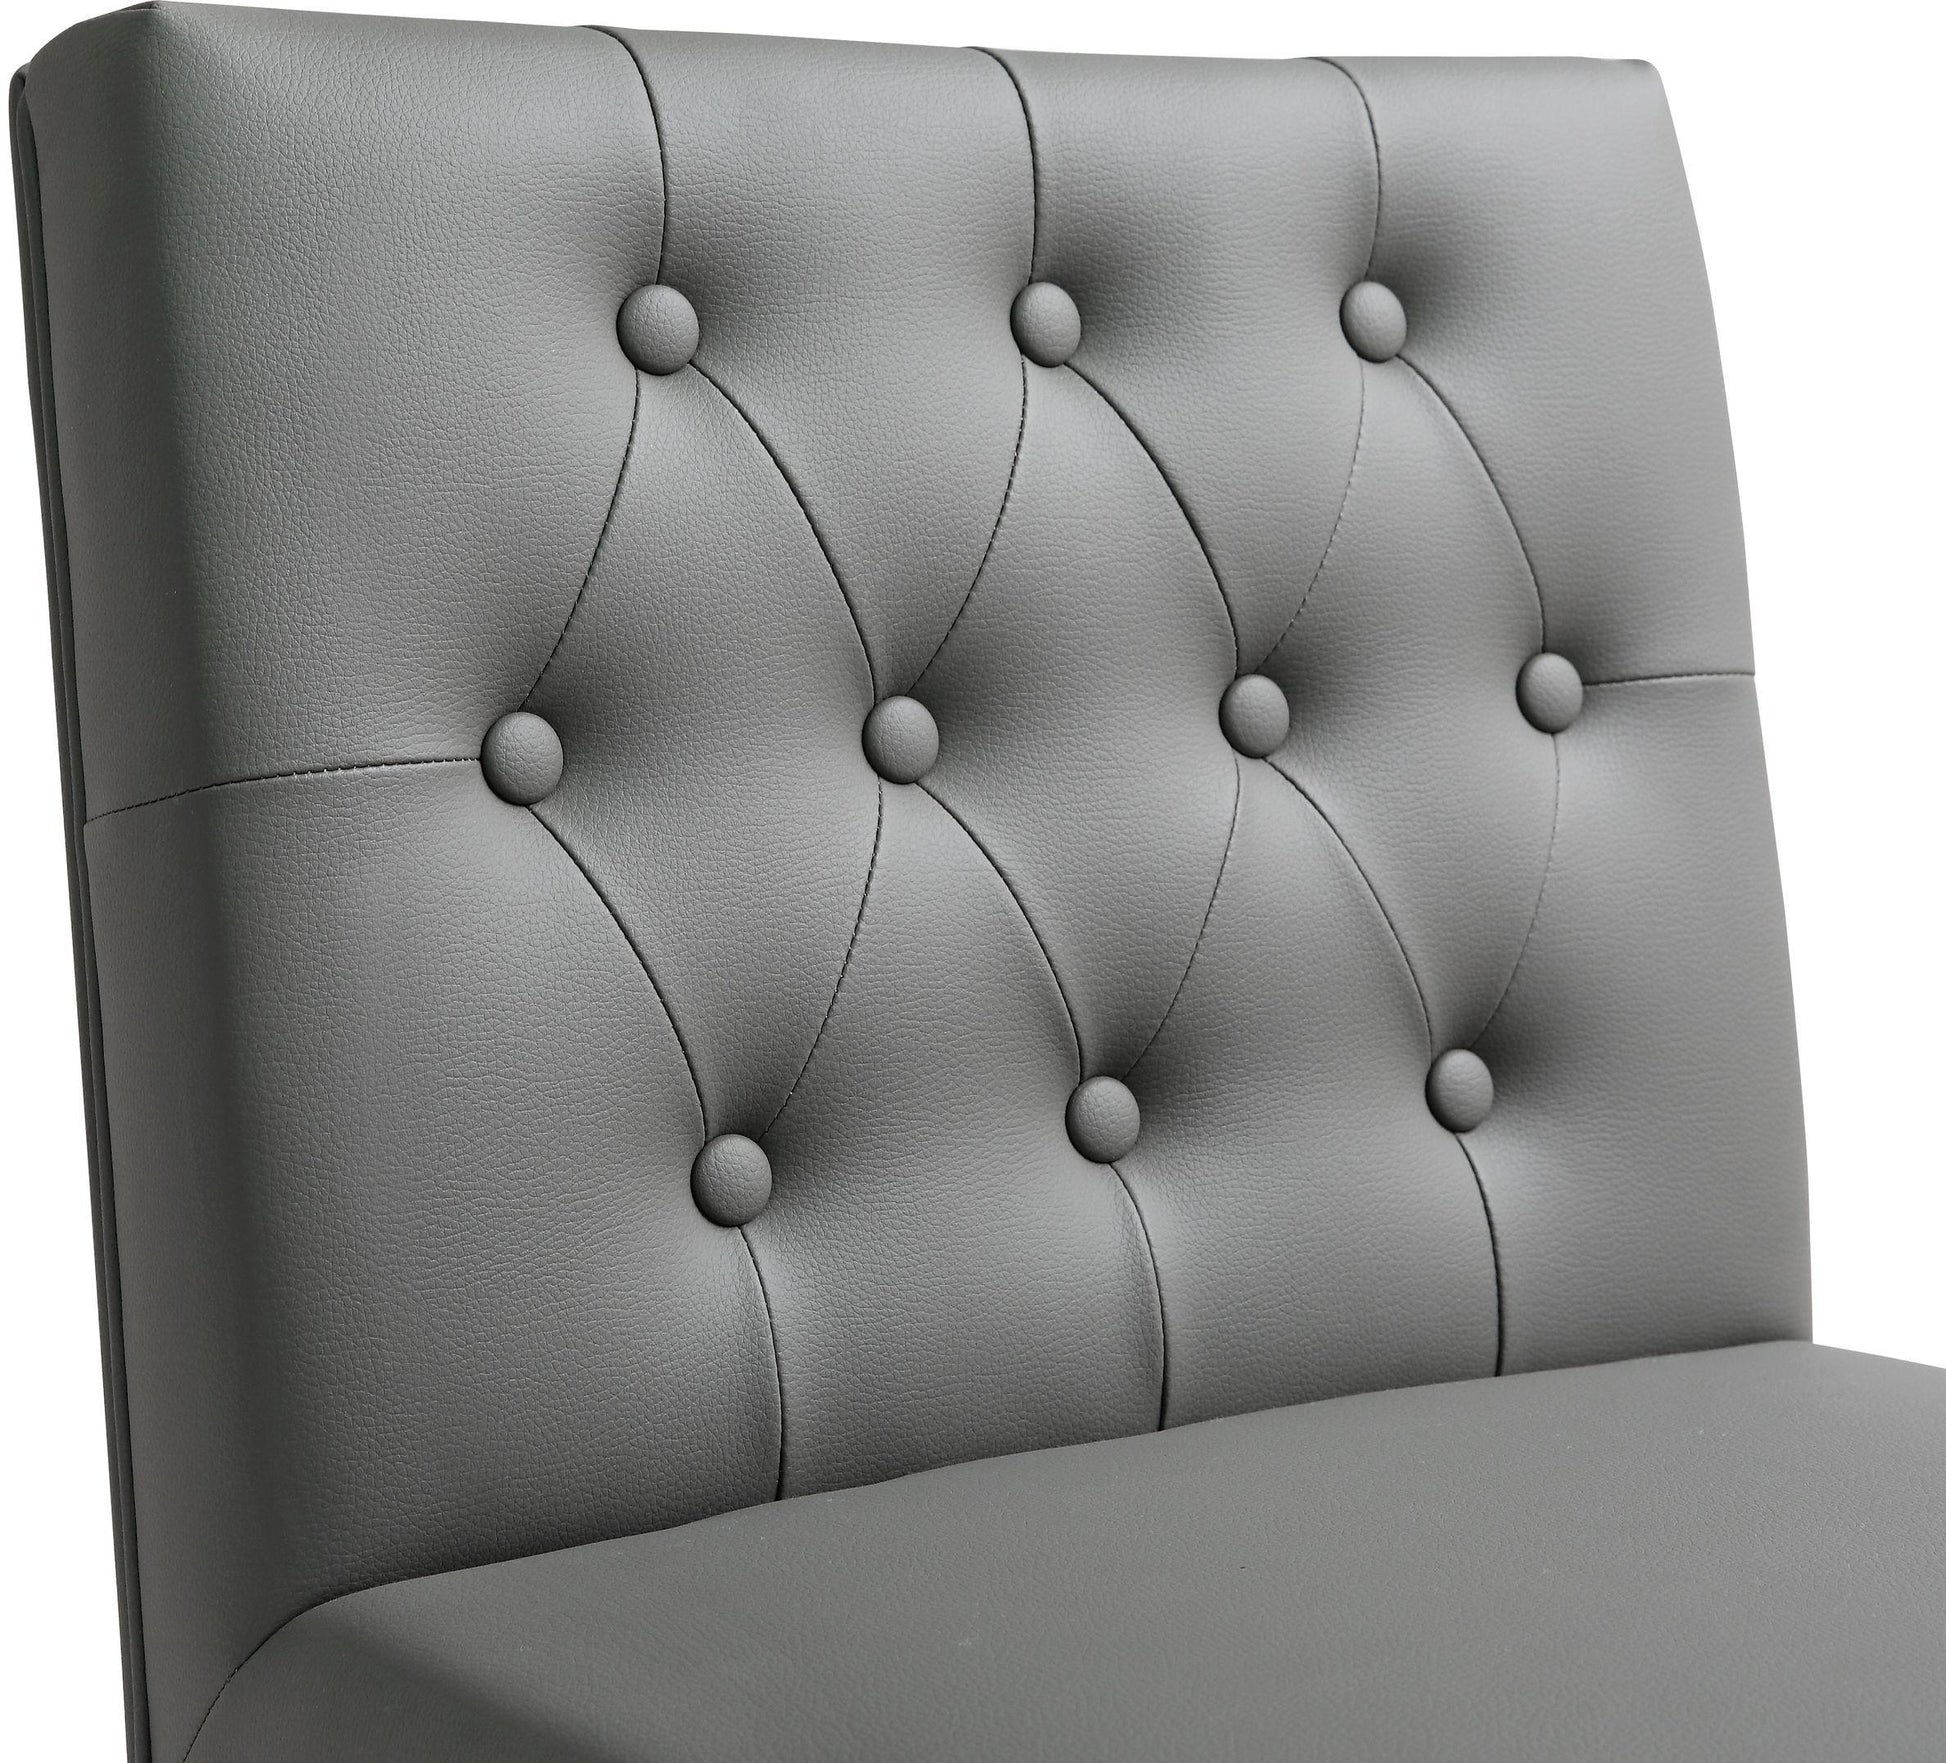 Tov Furniture Helsinki Grey Stainless Steel Barstool  Set of 2